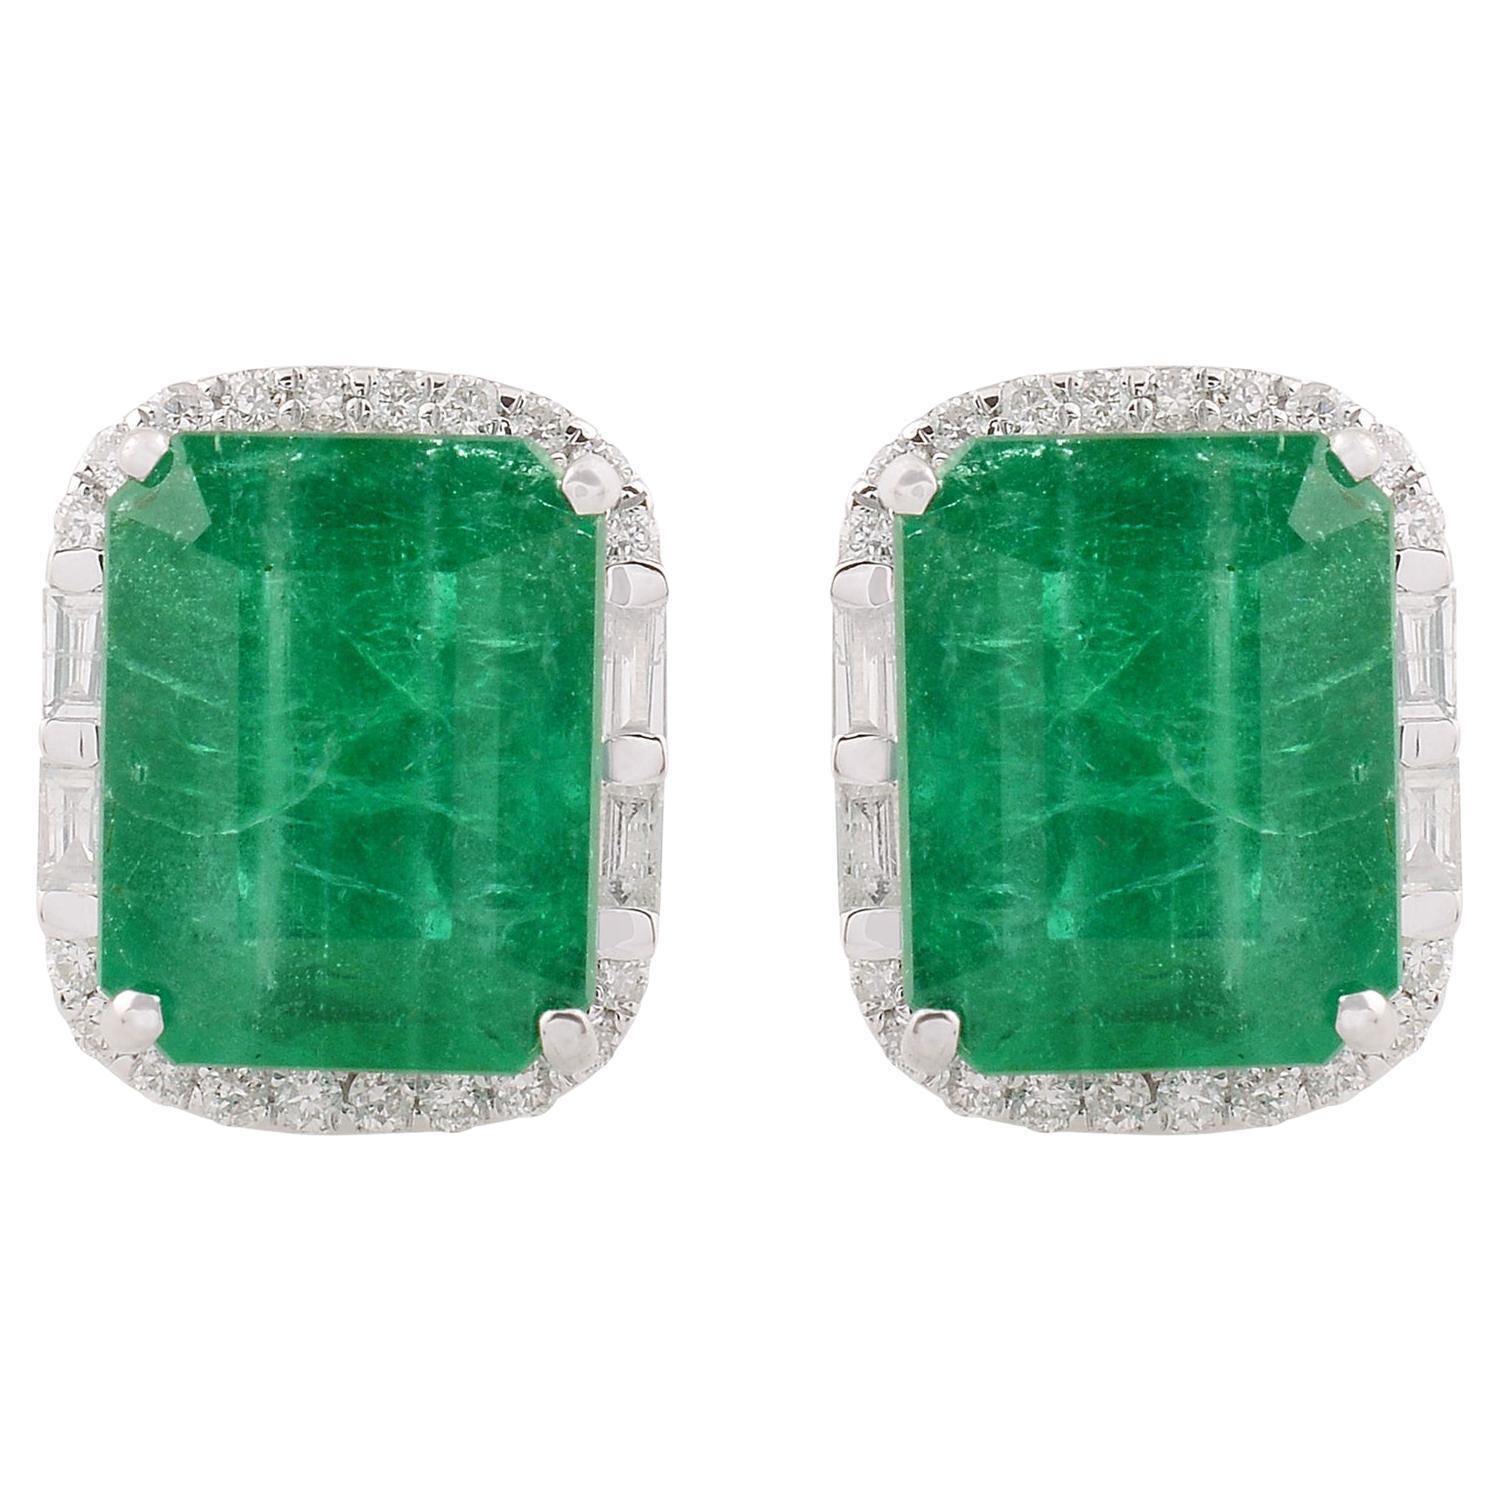 Zambian Emerald Stud Earrings SI Clarity HI Color Diamond 18k White Gold Jewelry For Sale